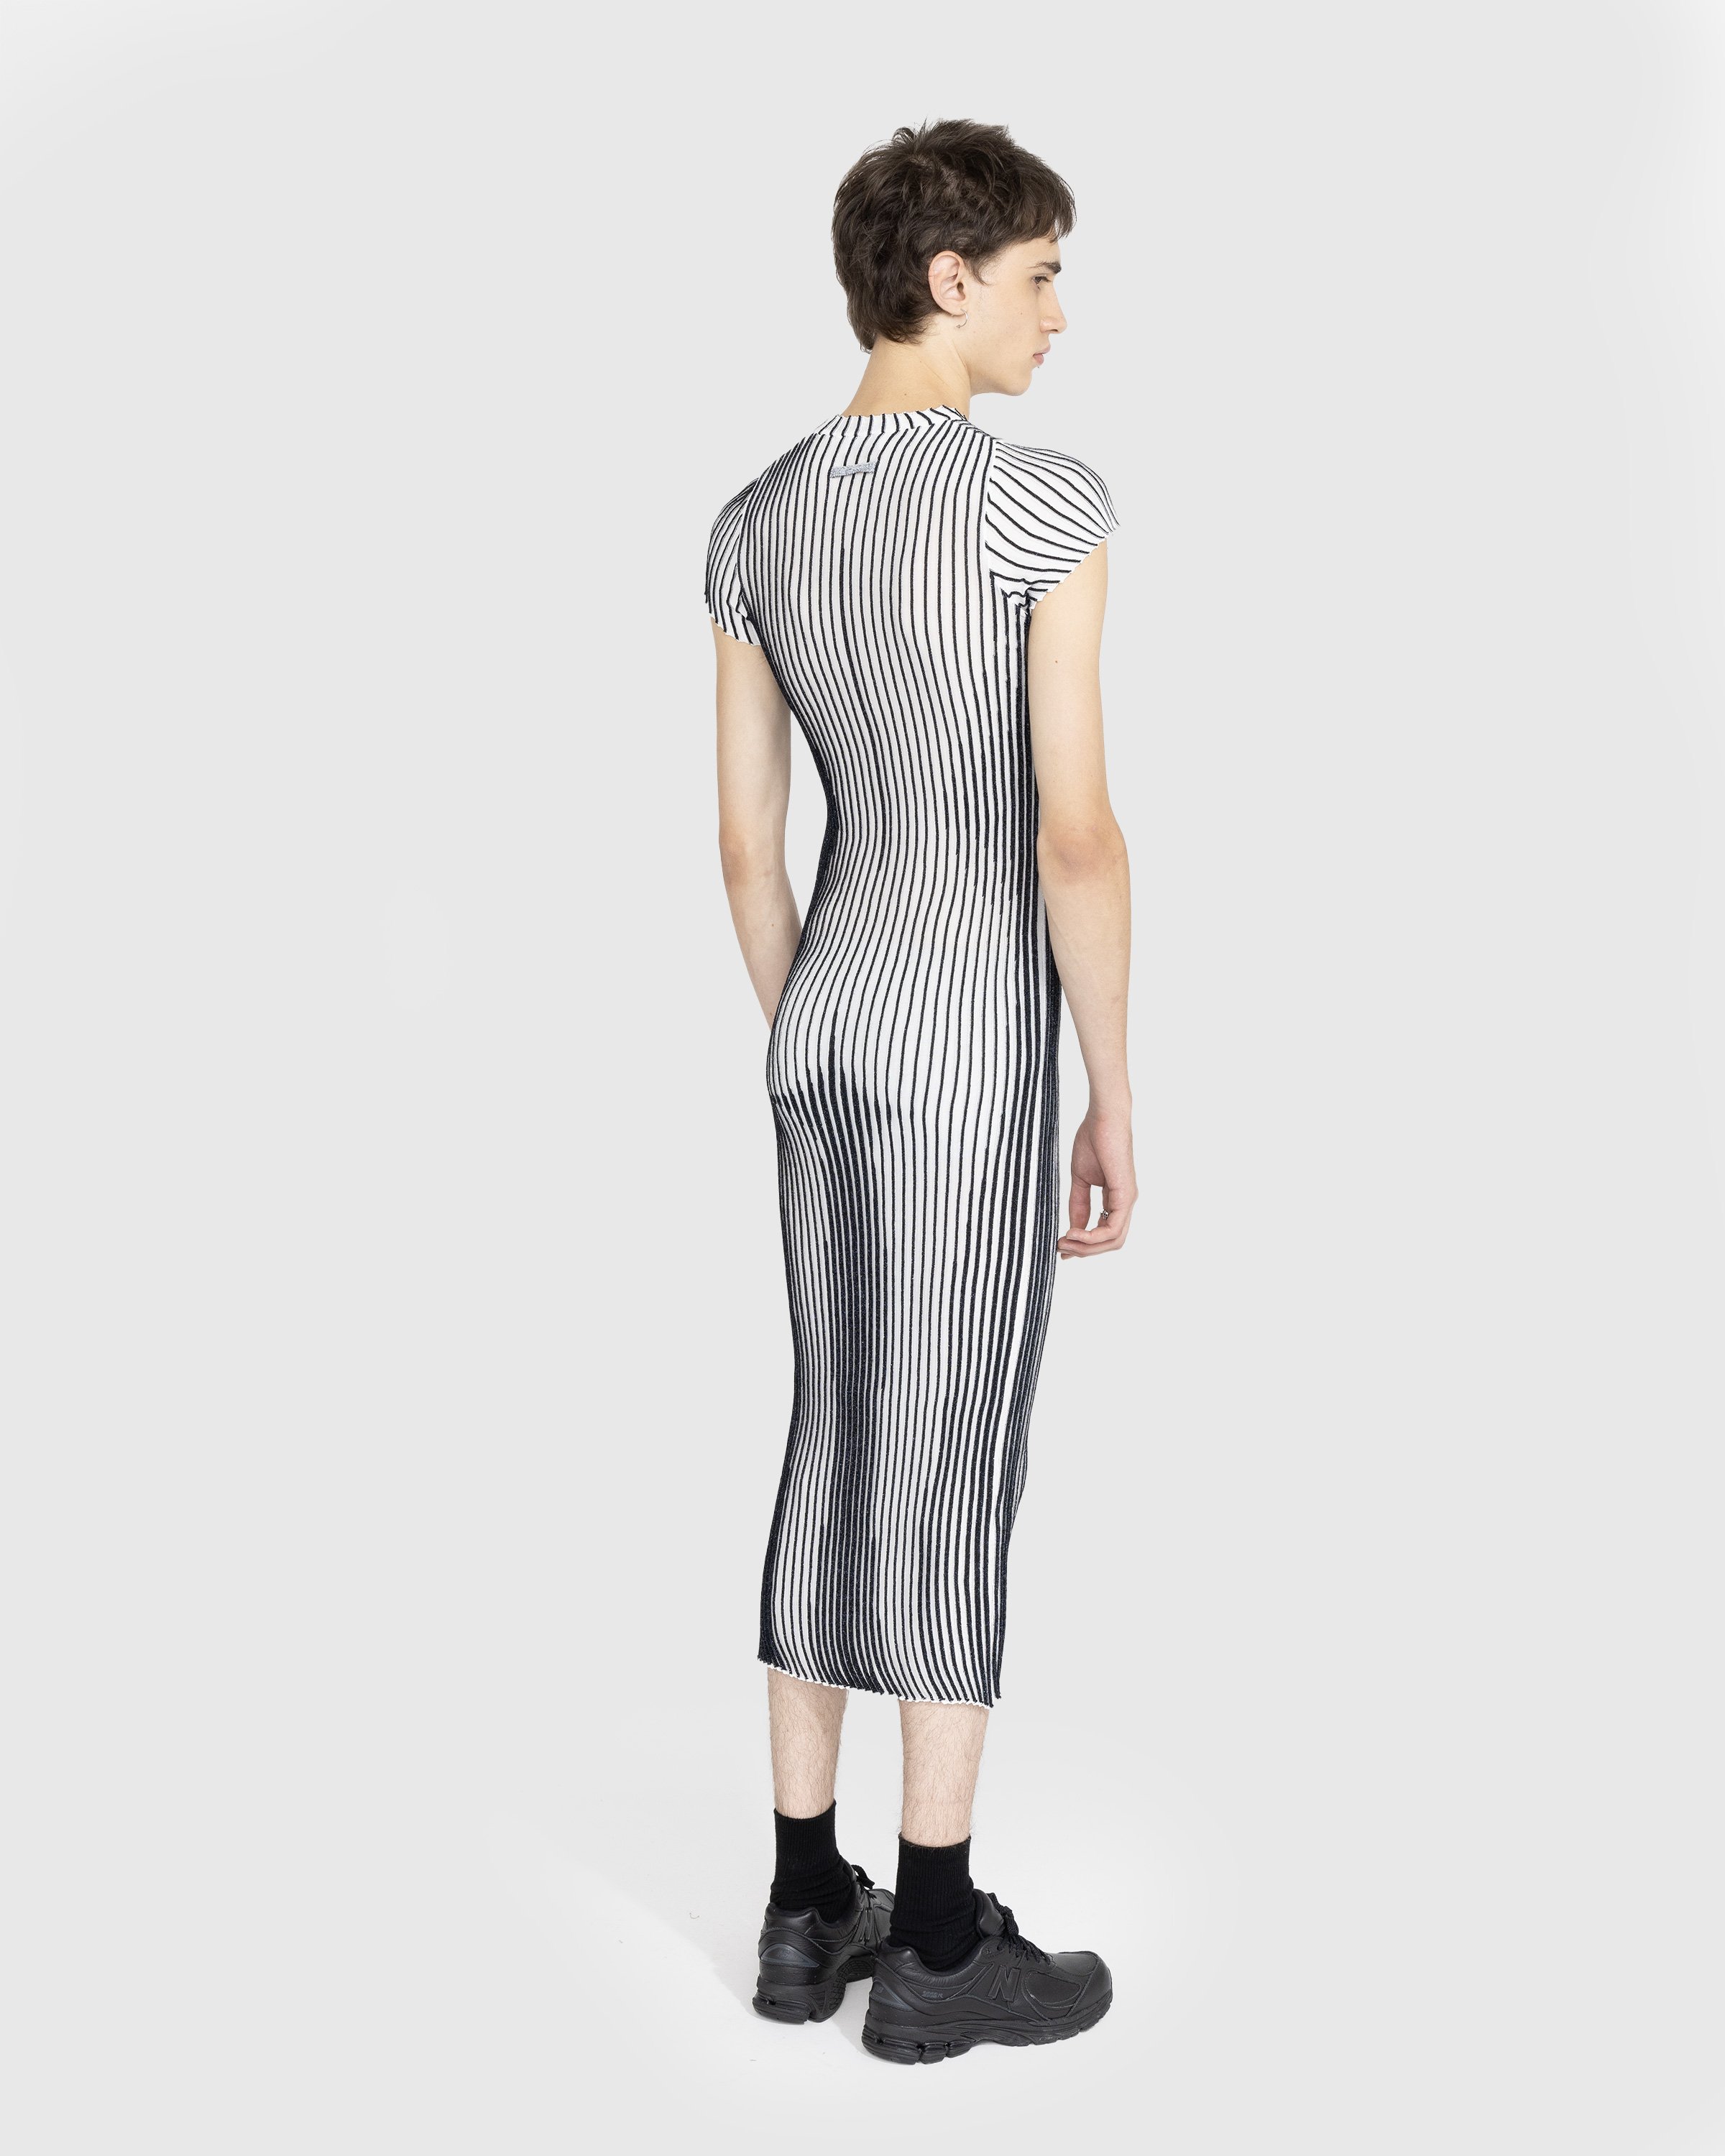 Jean Paul Gaultier - Short Sleeves Trompe L'Œil Long Dress White - Clothing - White - Image 3